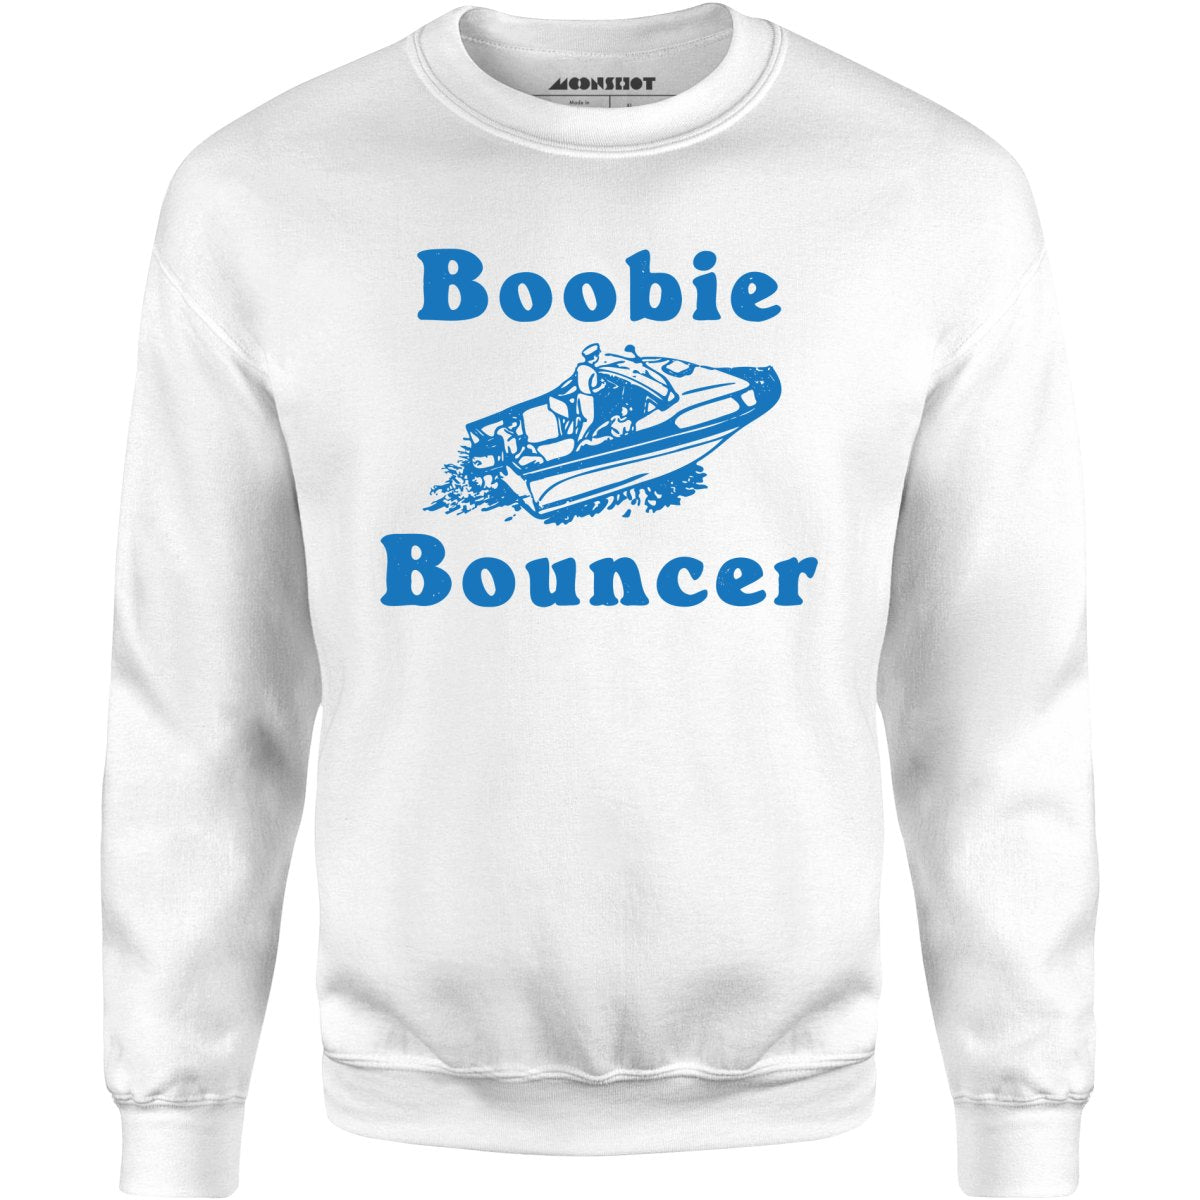 Boobie Bouncer - Unisex Sweatshirt